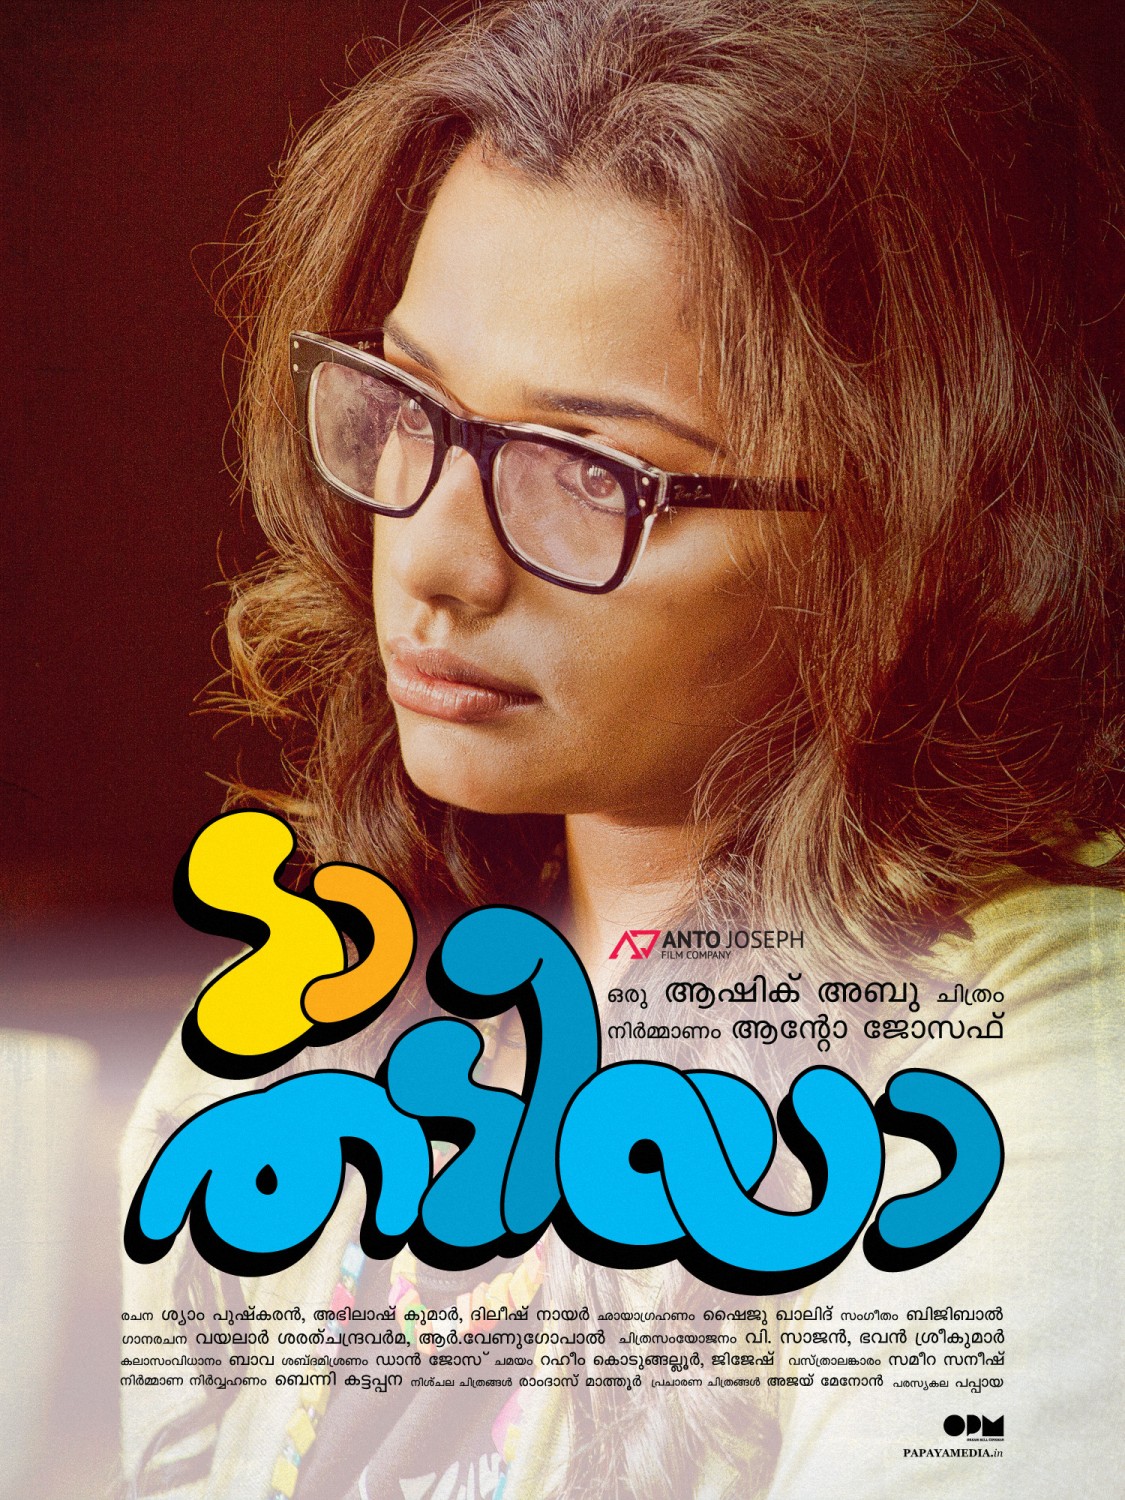 Extra Large Movie Poster Image for Da Thadiya (#28 of 50)